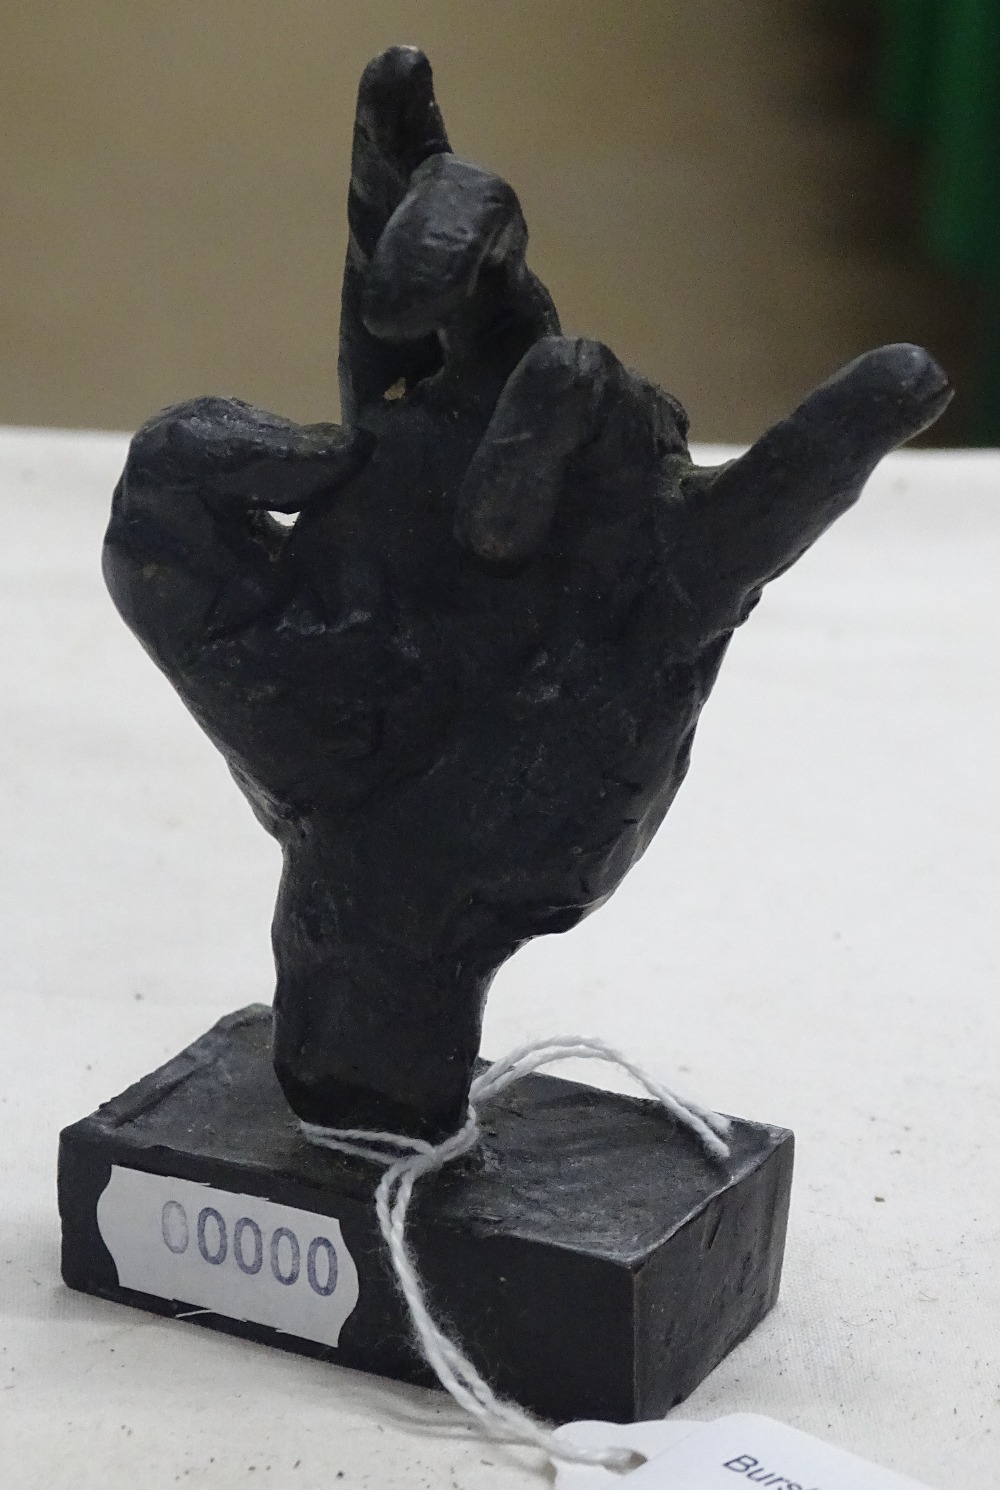 A small bronze sculpture of a hand.